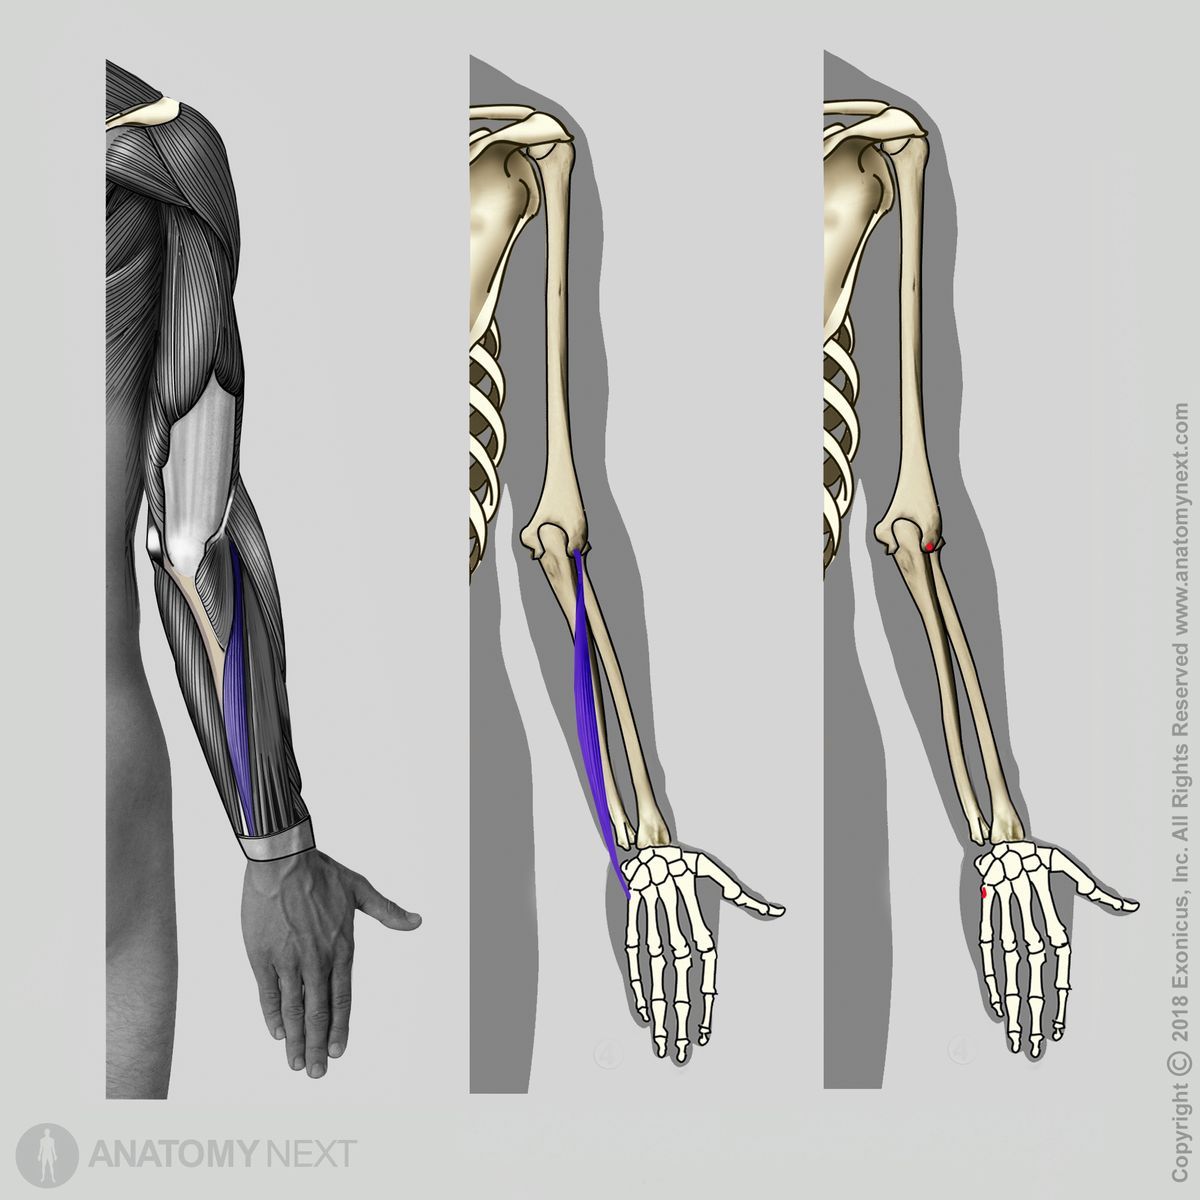 Extensor carpi ulnaris, Origin of extensor carpi ulnaris, Insertion of extensor carpi ulnaris, Forearm muscles, Muscles of the forearm, Posterior compartment of the forearm muscles, Posterior compartment muscles, Extensors, Human arm, Human muscles